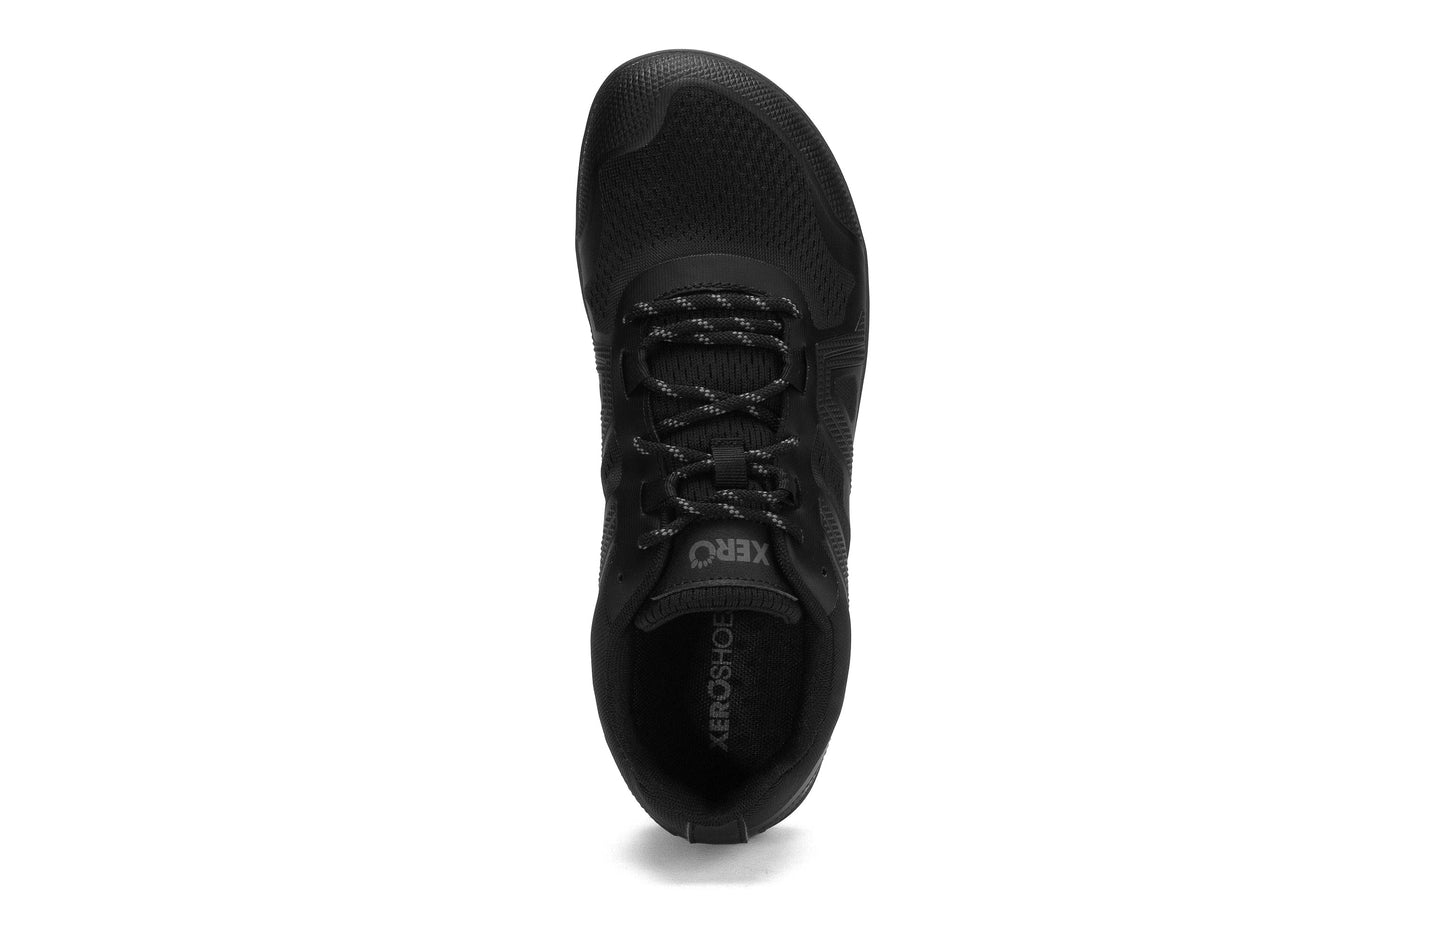 Xero Shoes Mesa Trail II Mens barfods vandresko til mænd i farven black, top